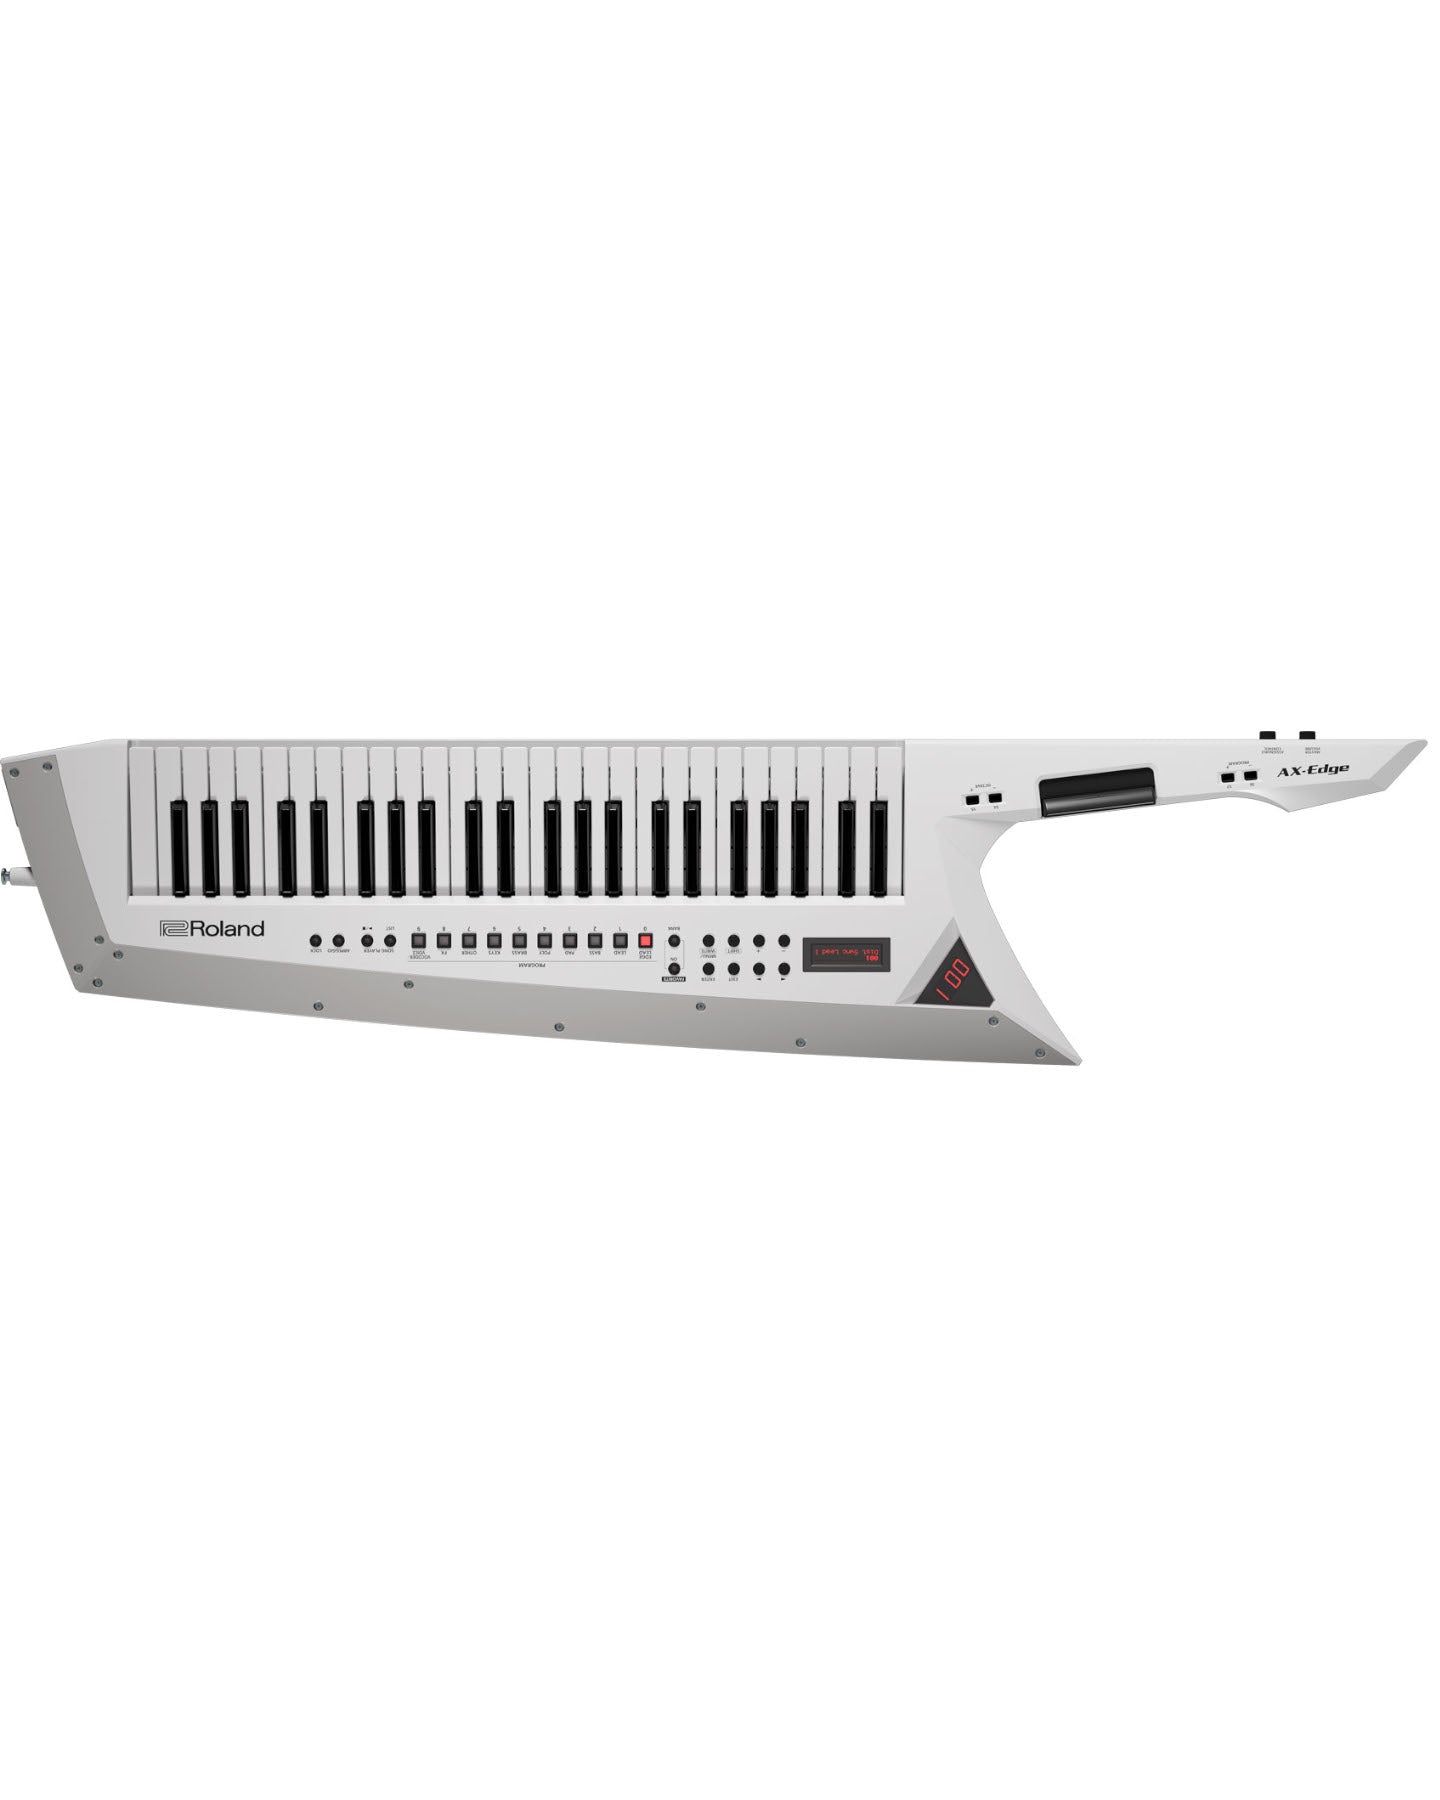 Roland AX-Edge 49-Key Keytar Synthesizer, White